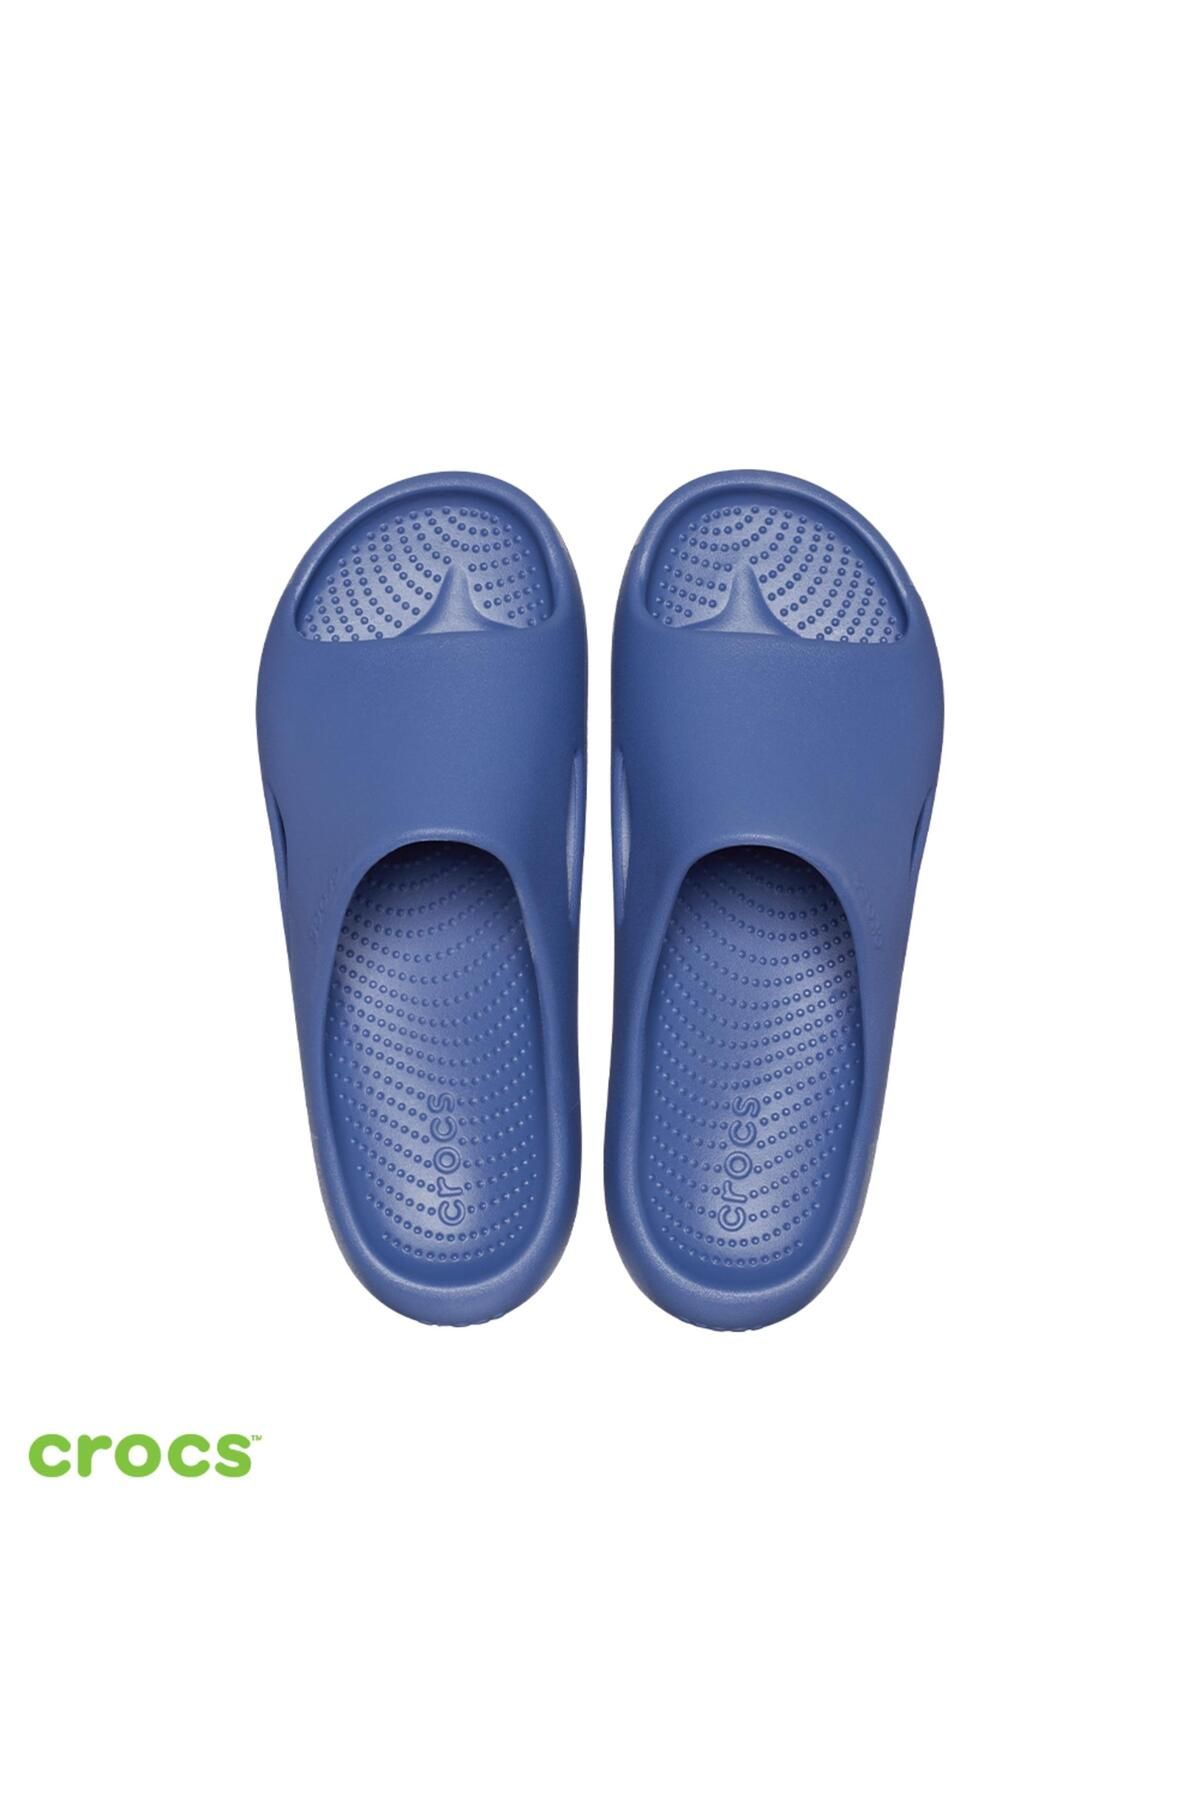 Crocs اسلاید ریکاوری مولک unisex 208392